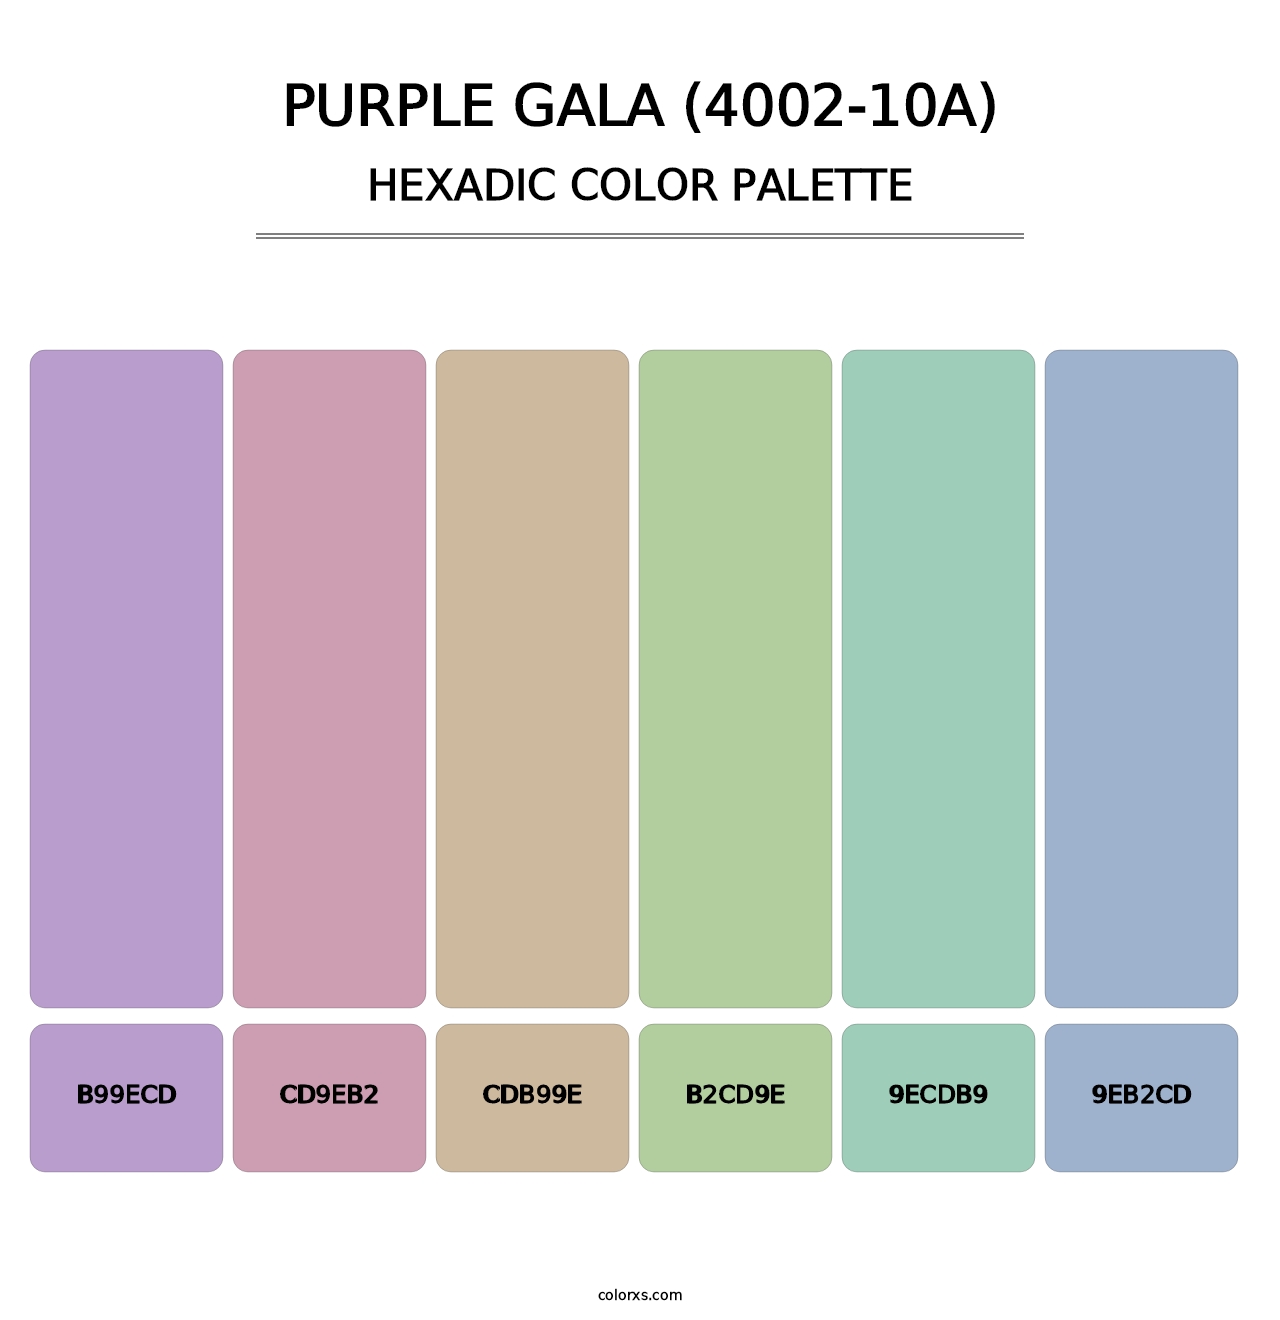 Purple Gala (4002-10A) - Hexadic Color Palette